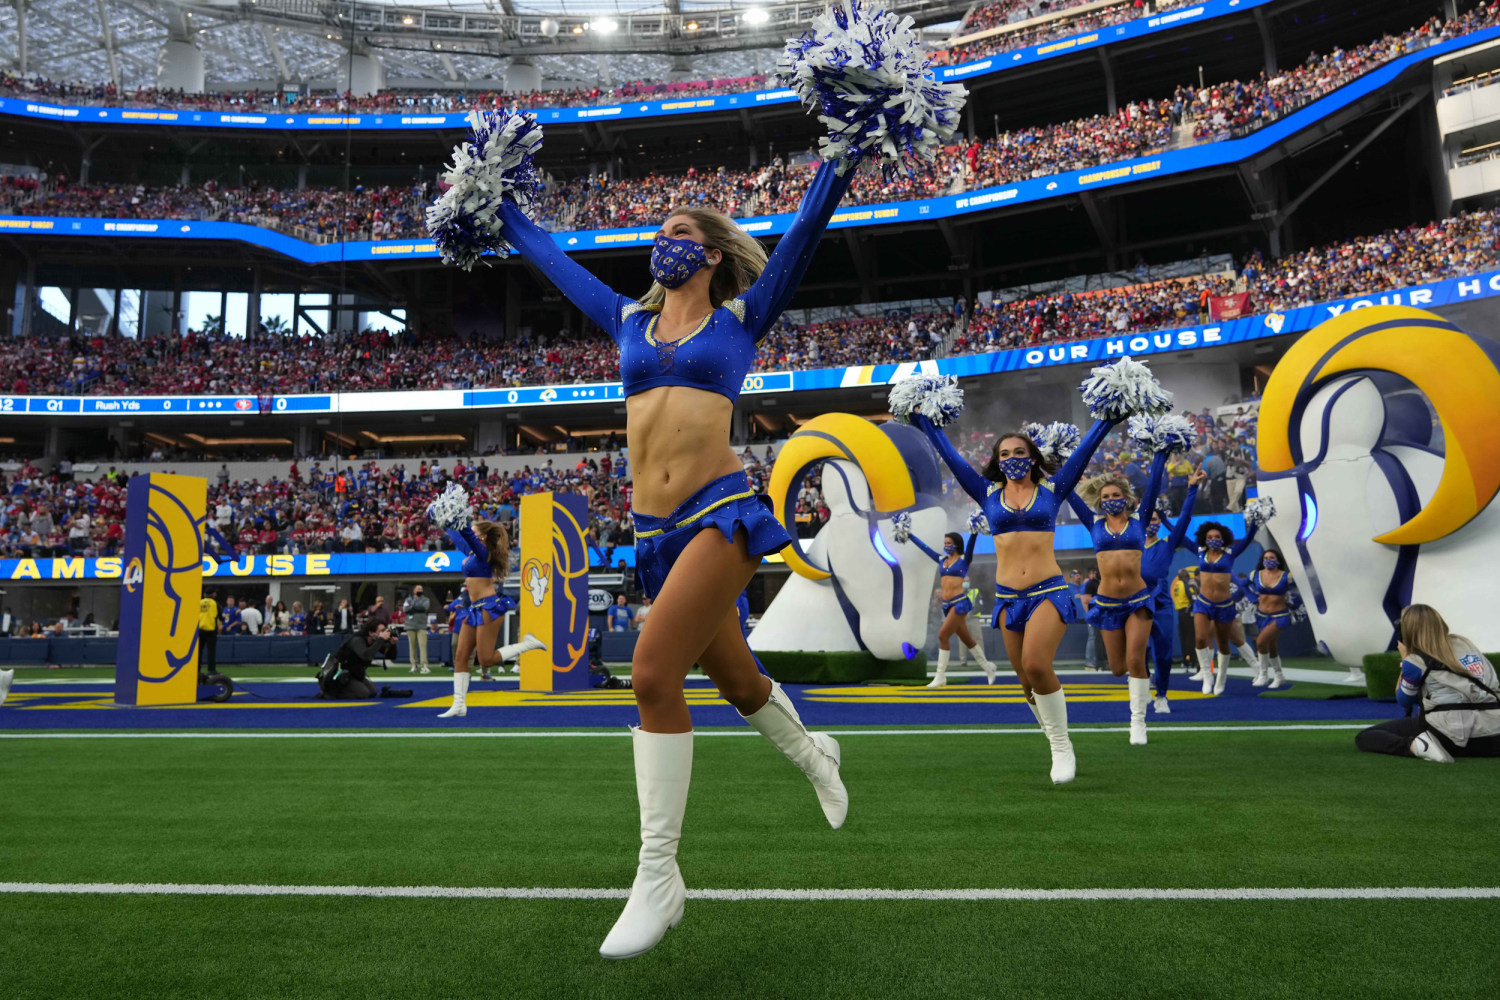 Meet the LA Rams cheerleader who made history